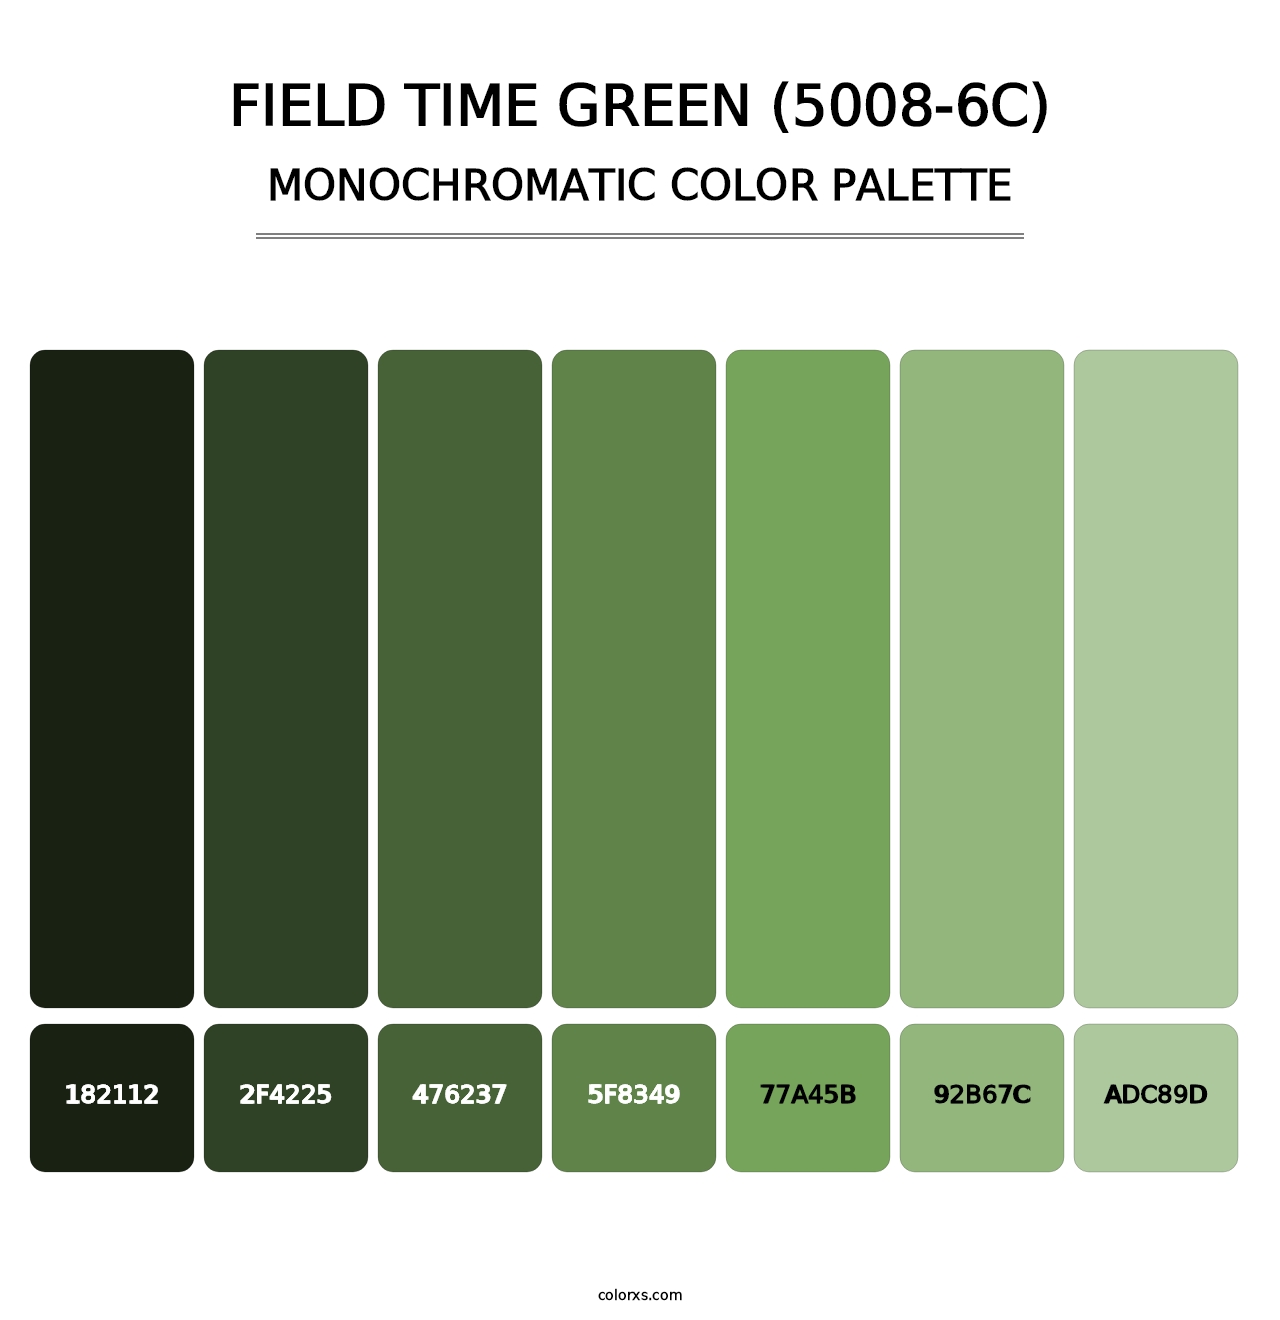 Field Time Green (5008-6C) - Monochromatic Color Palette